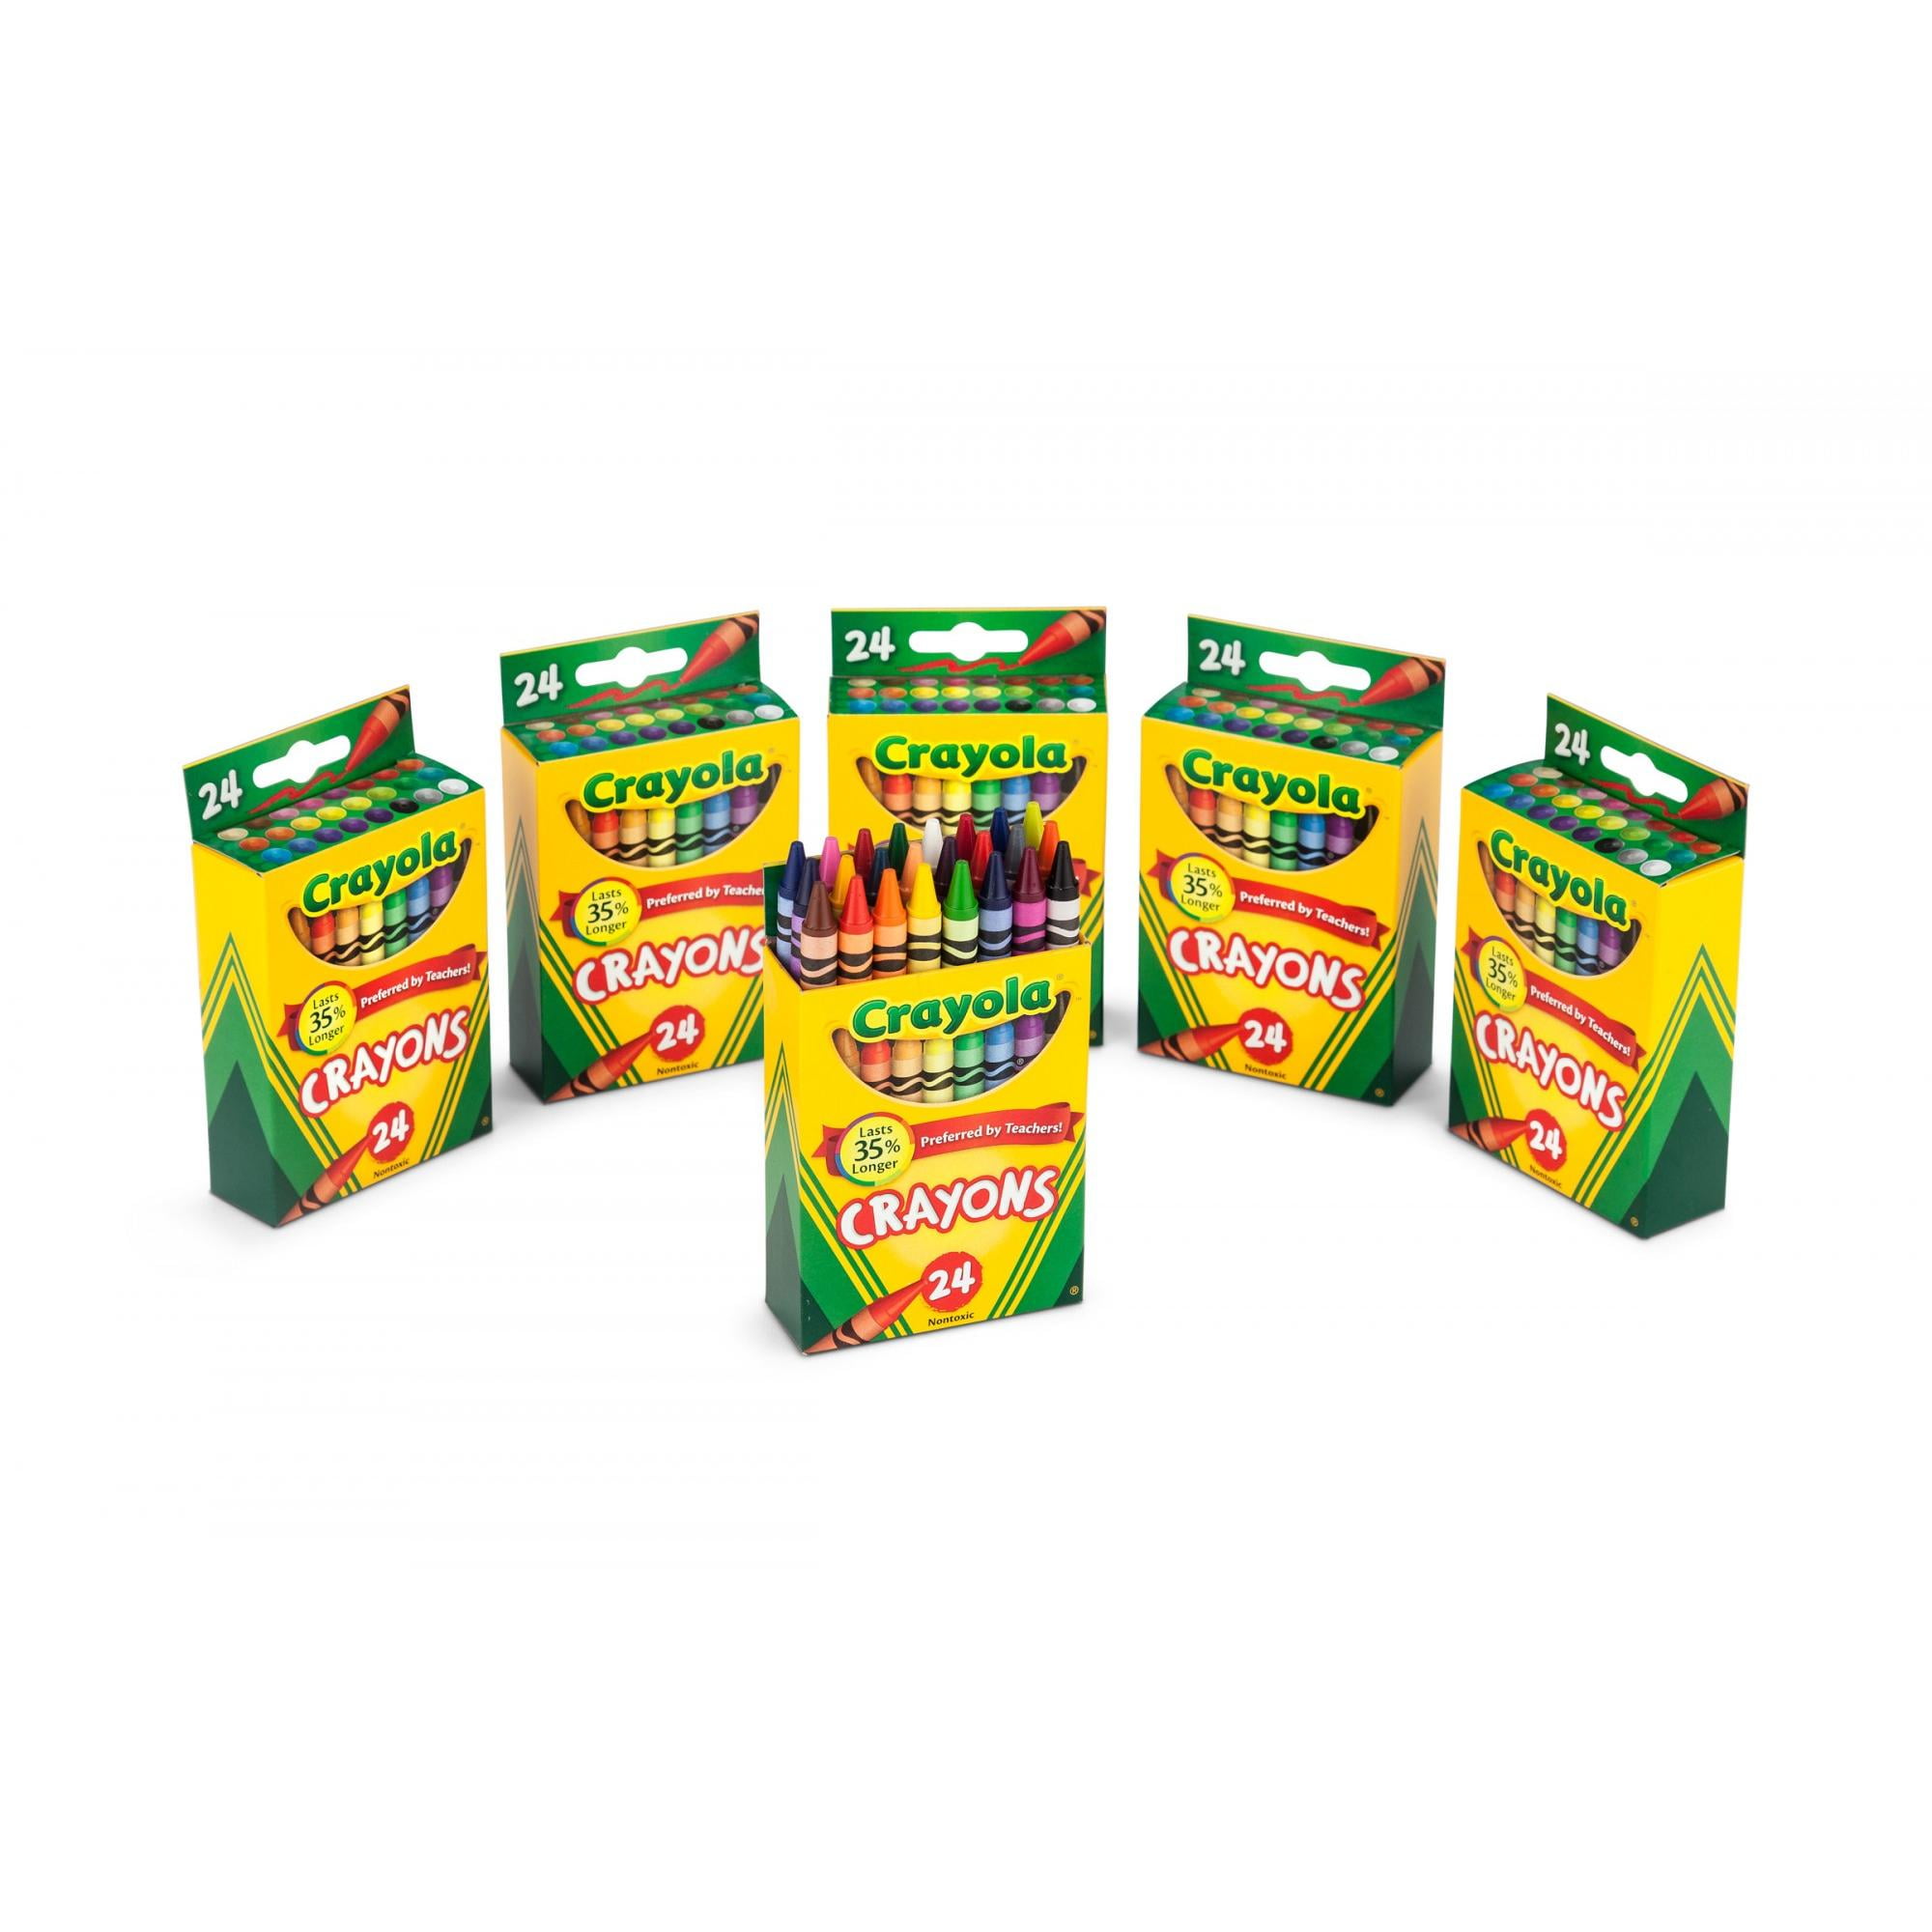 Crayola 24 Count Crayons (6-pack)